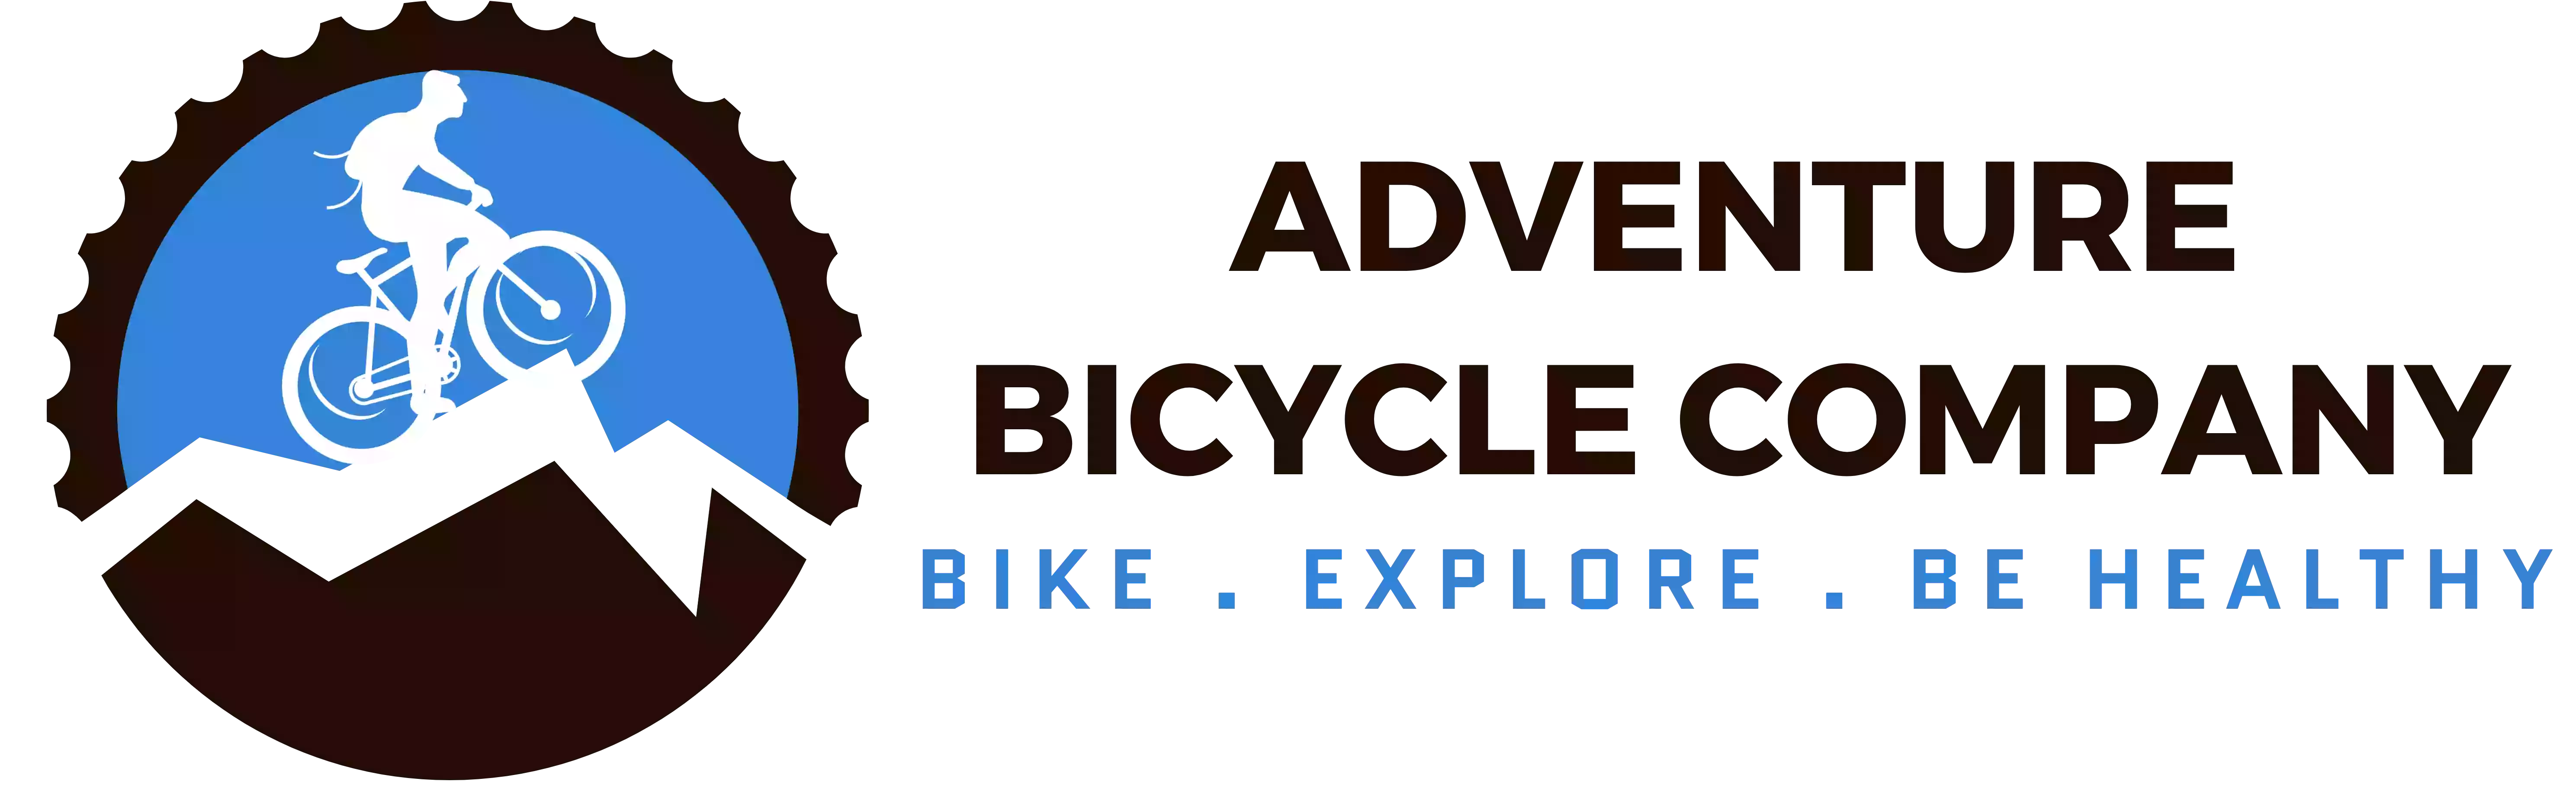 Adventure Bicycle Company